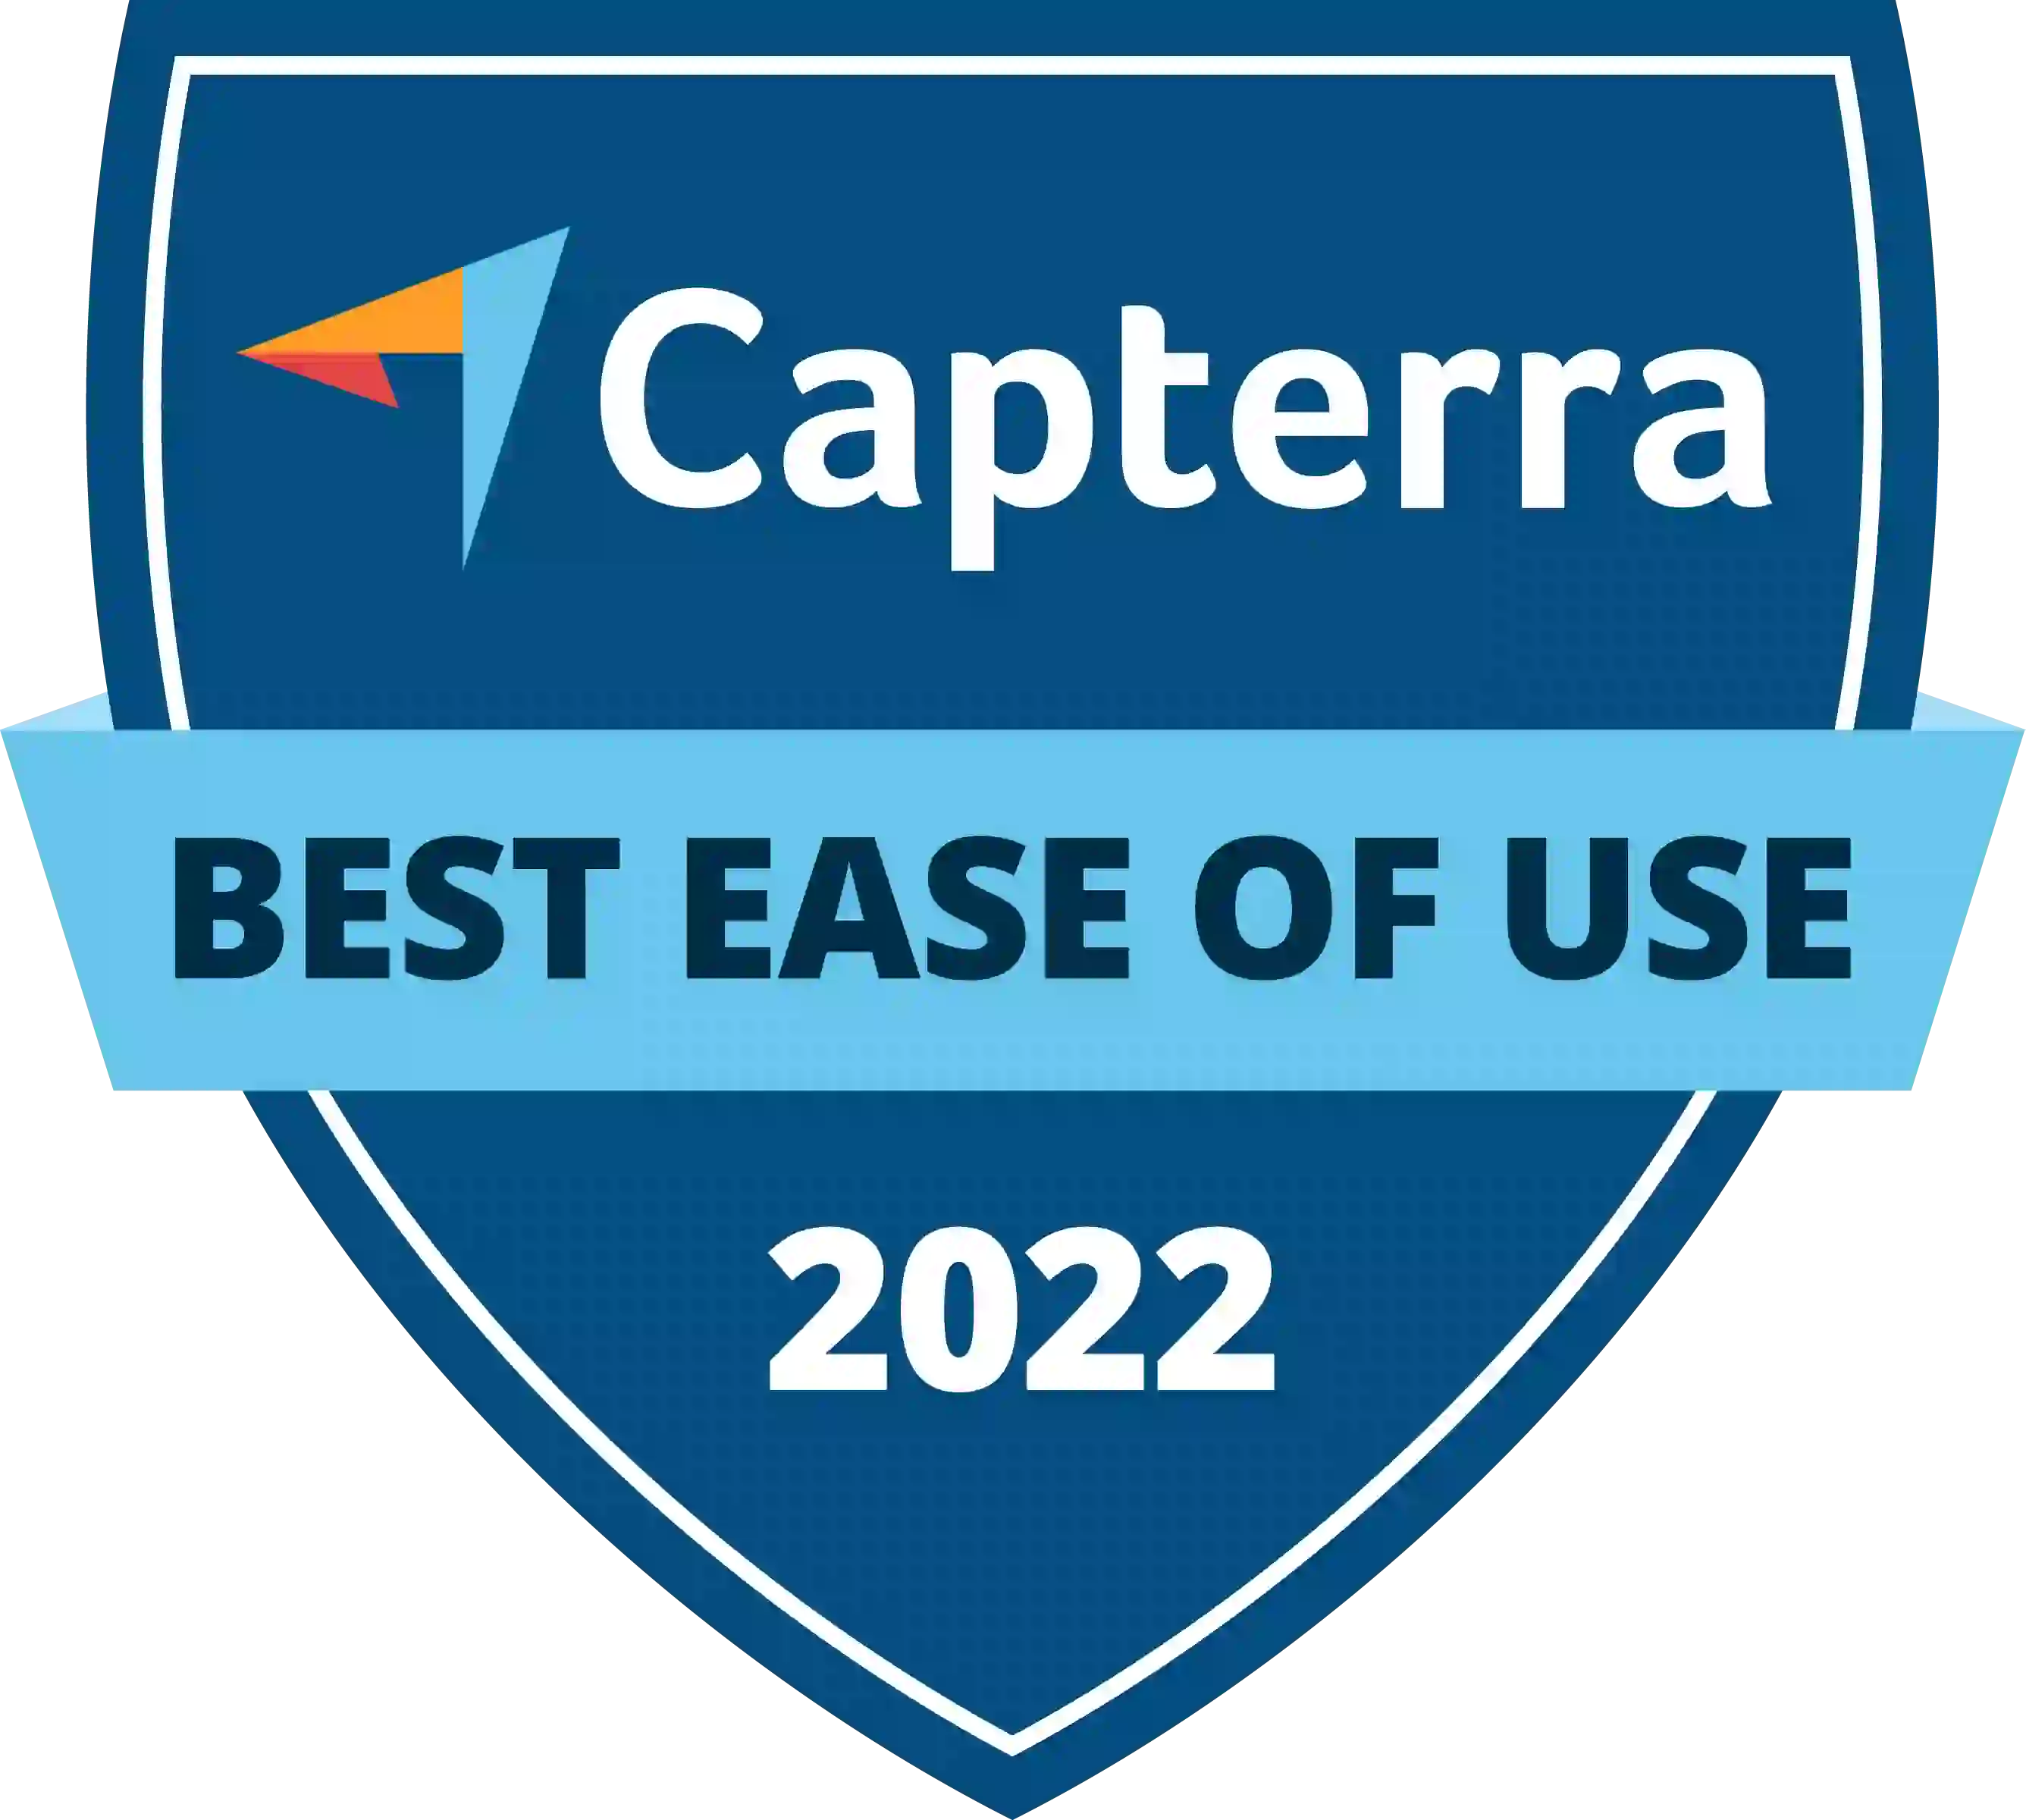 Capterra 2022 best ease of use award badge